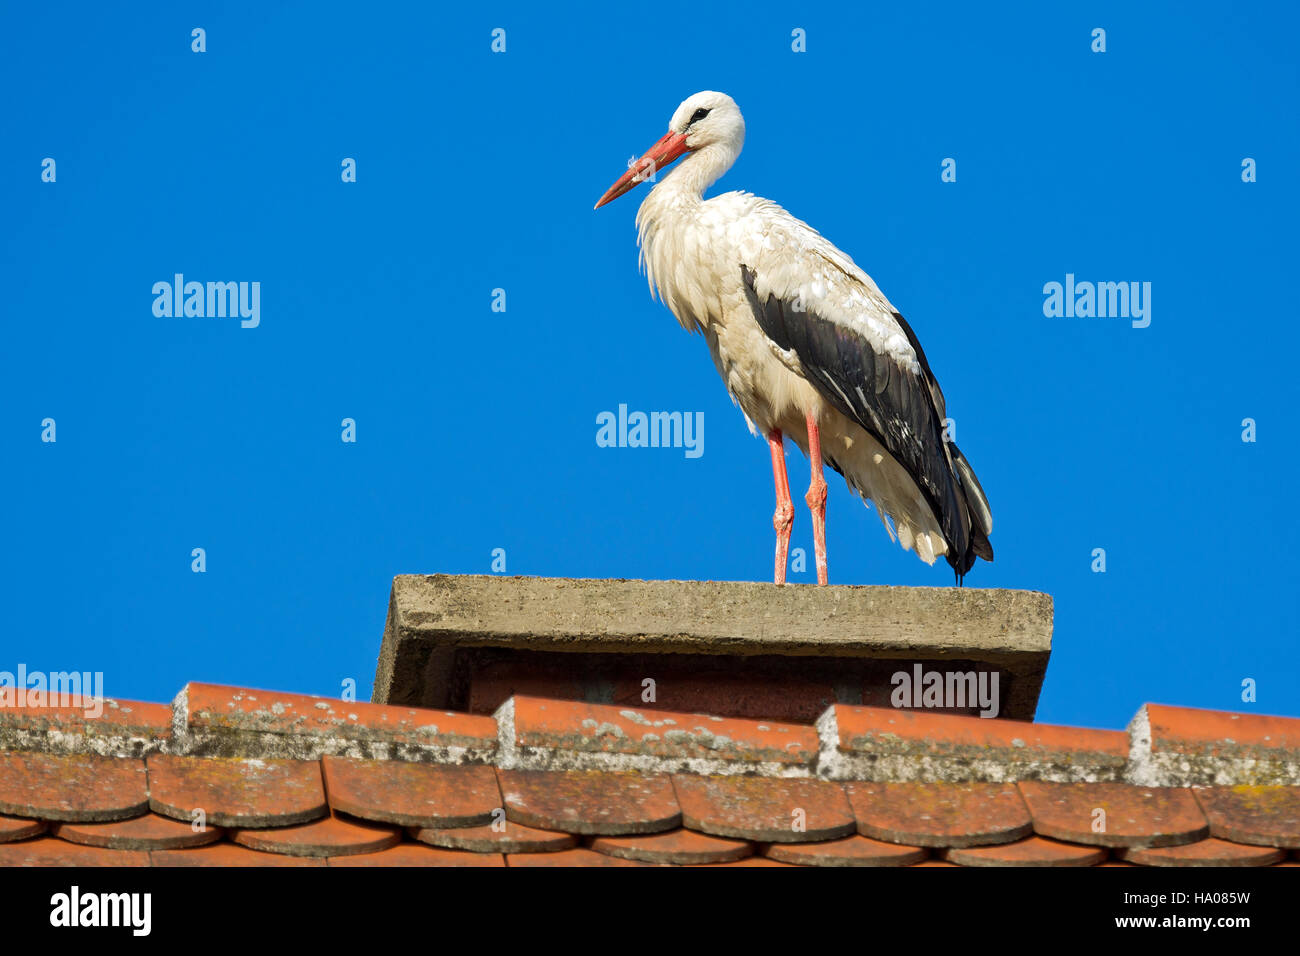 White stork (Ciconia ciconia) standing on roof, Burgenland, Austria Stock Photo